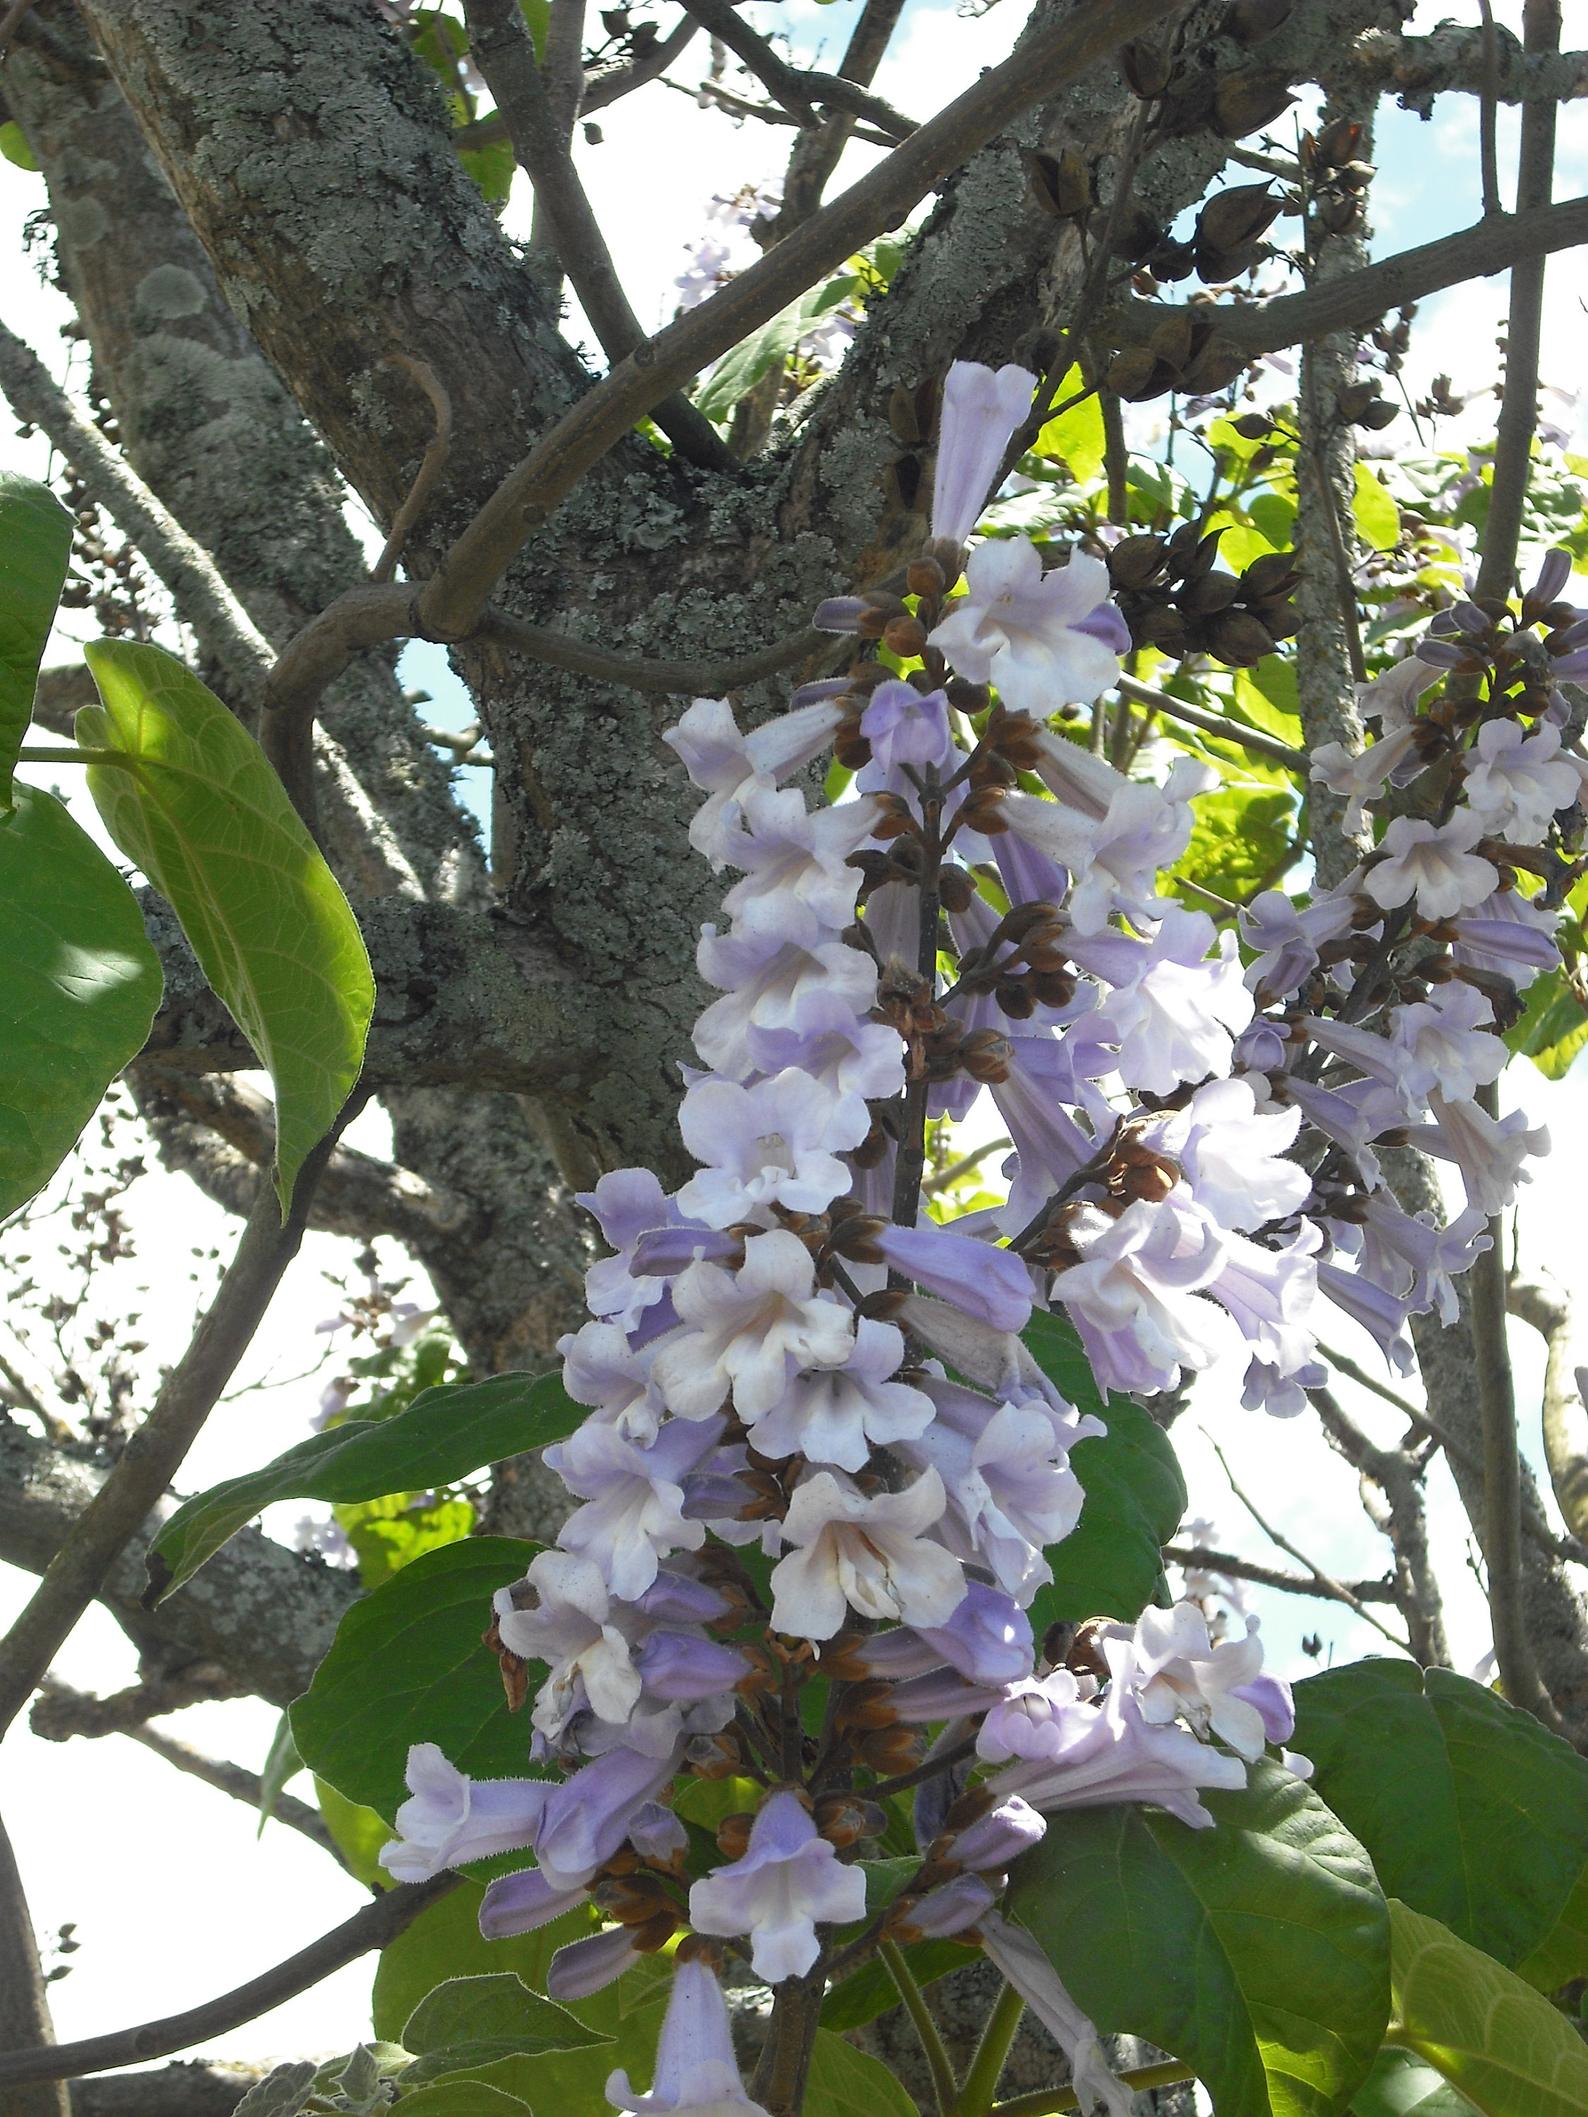 Paulownia elongata (Empress Tree)